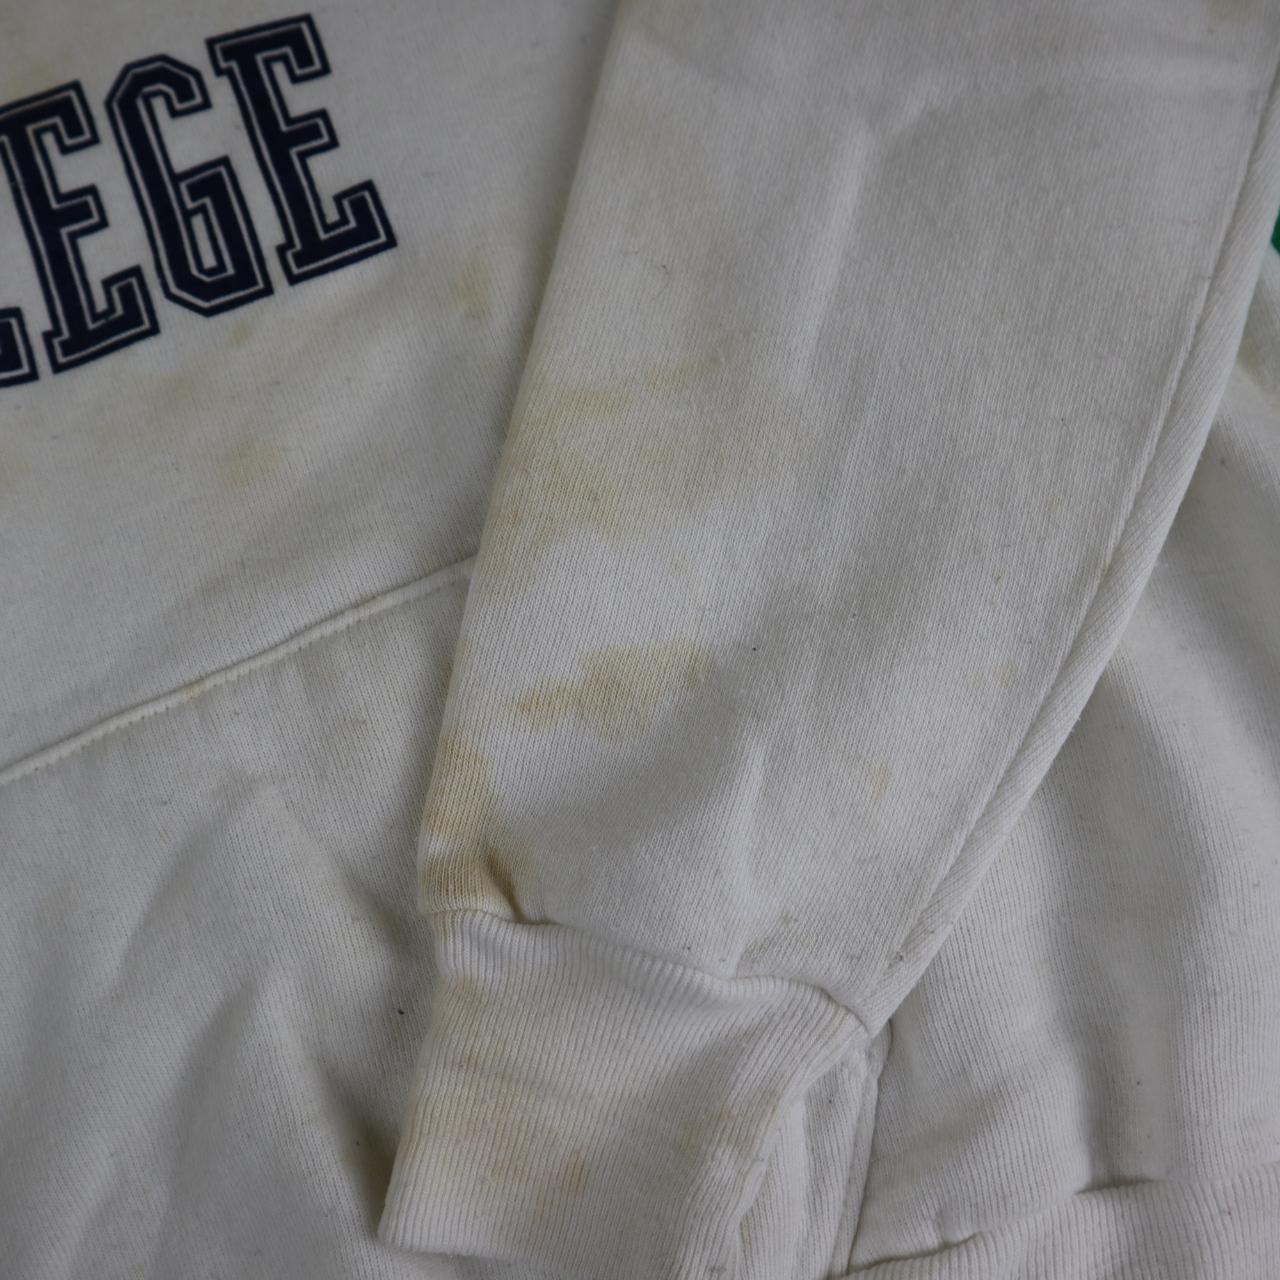 Product Image 3 - Vintage Muskingum College hoodie

SIZE: L

MEASUREMENTS

WIDTH: